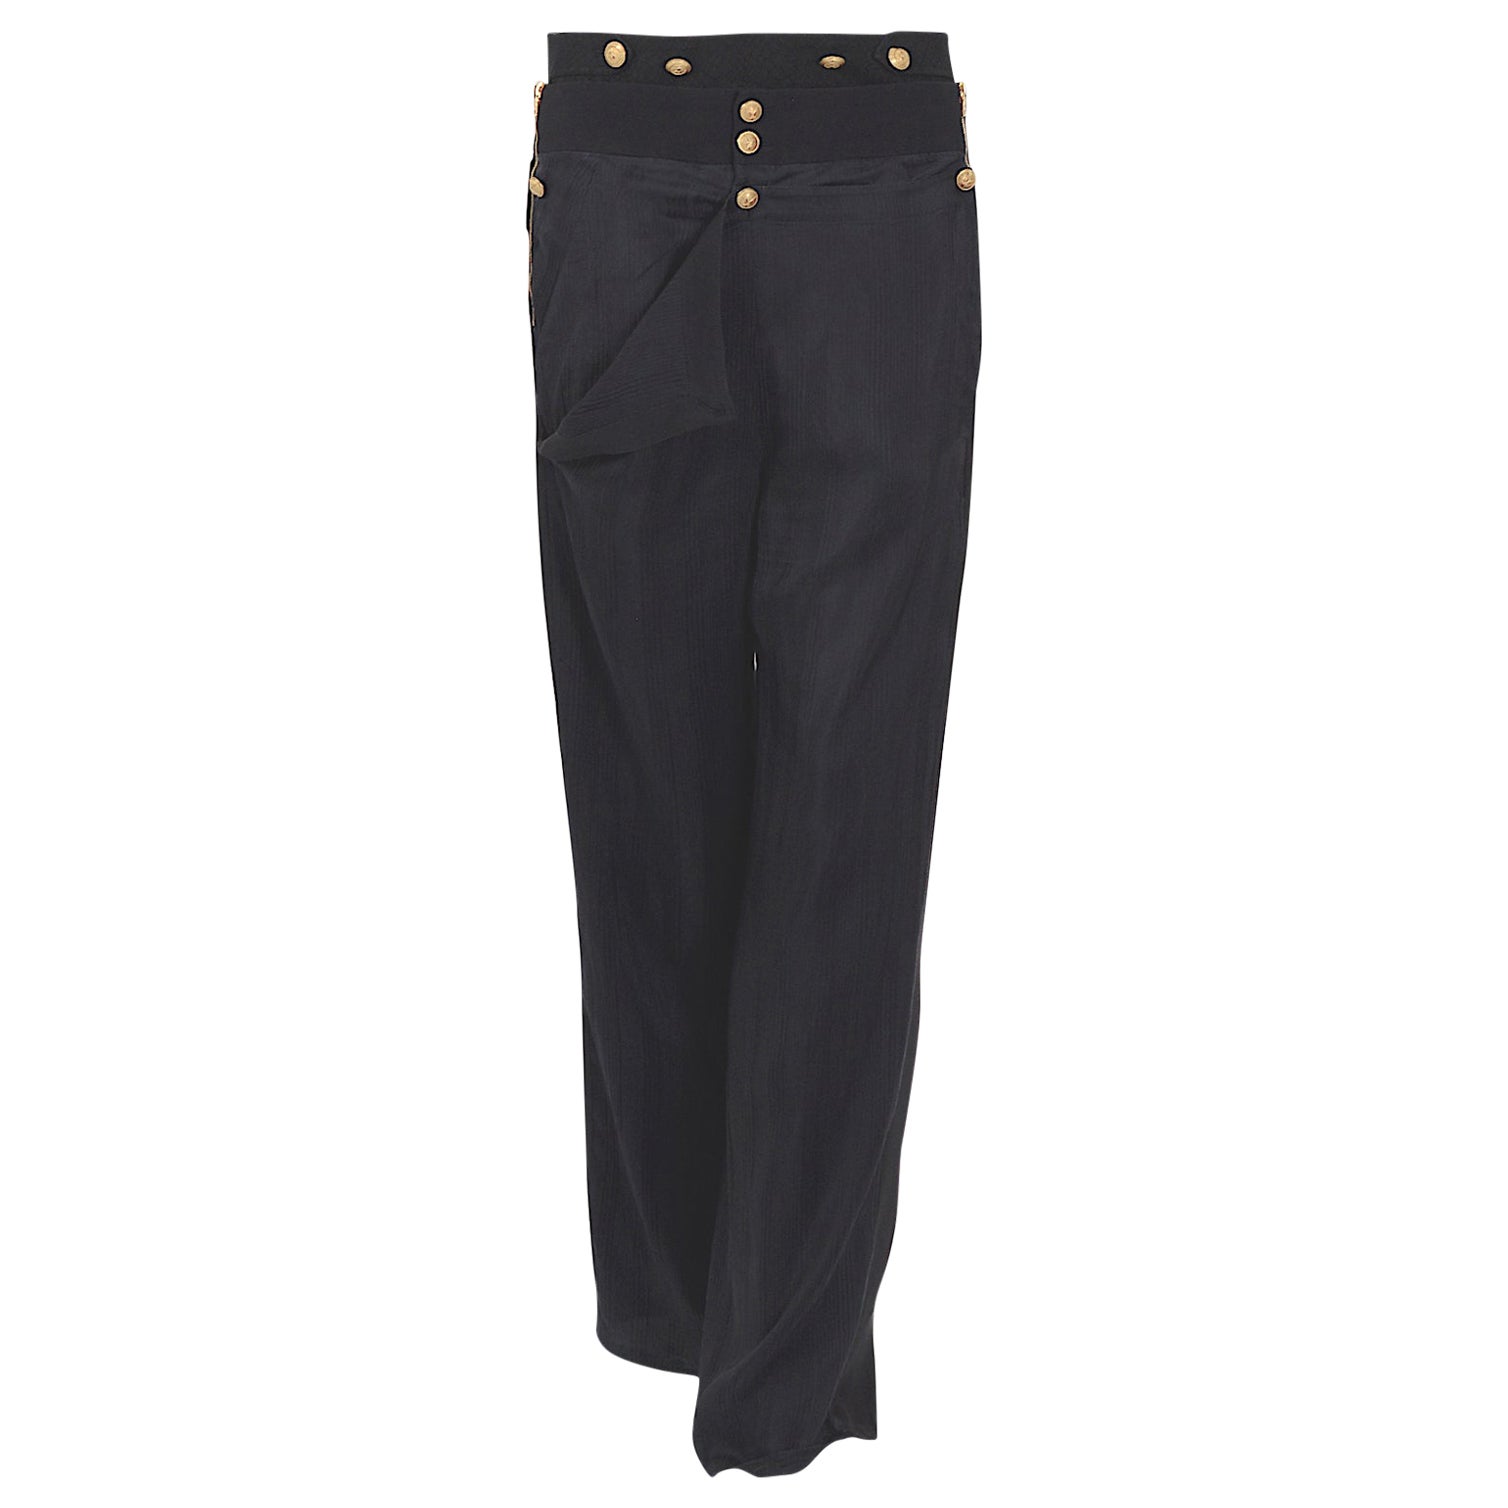 Balenciaga by Nicolas Ghesquière SS 2005 runway black silk brass buttons pants For Sale